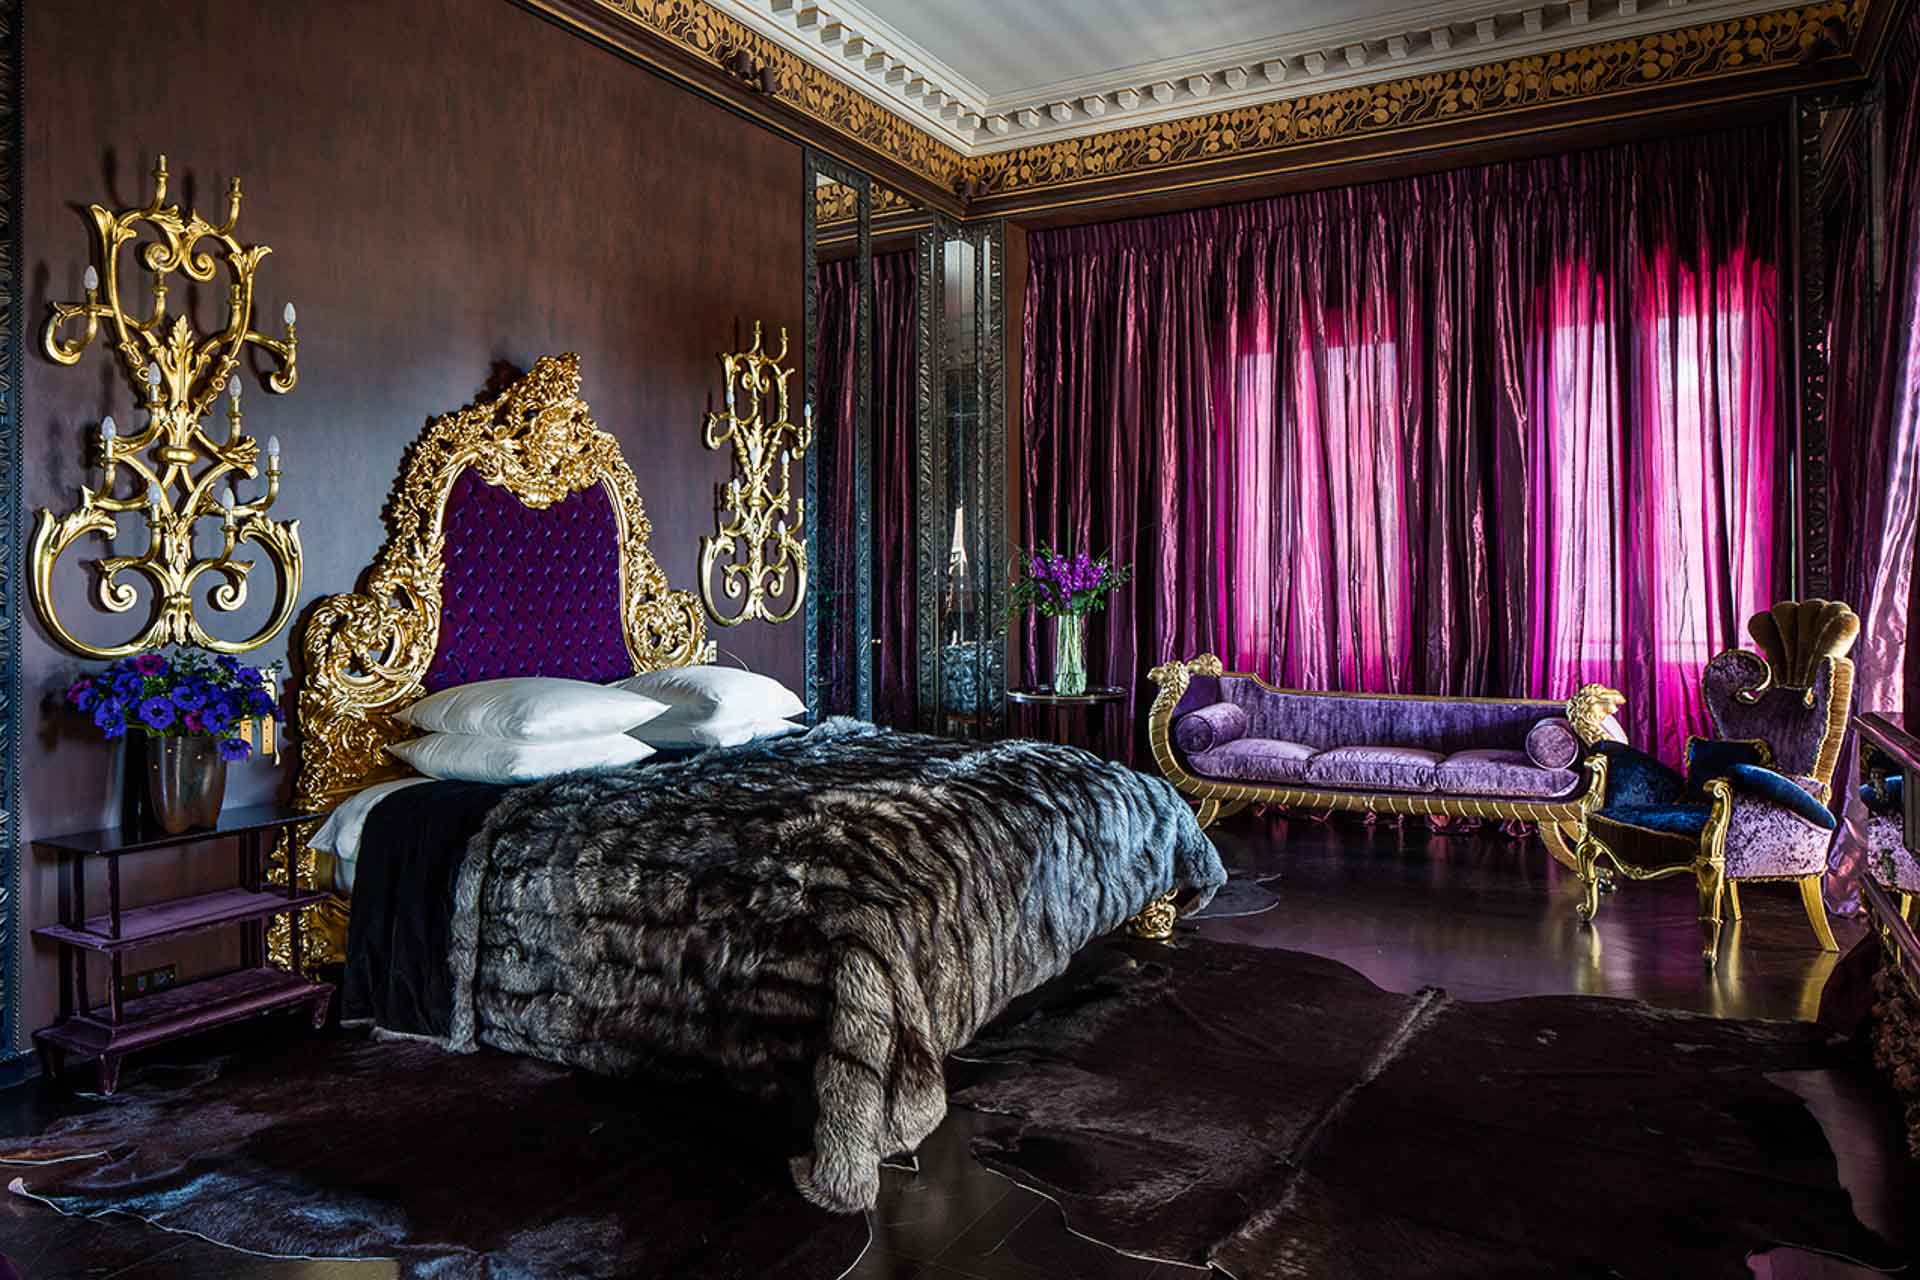 Villa Clara Rome best accommodation luxury ensuite master suite bedroom luxury service guest night stay best linen